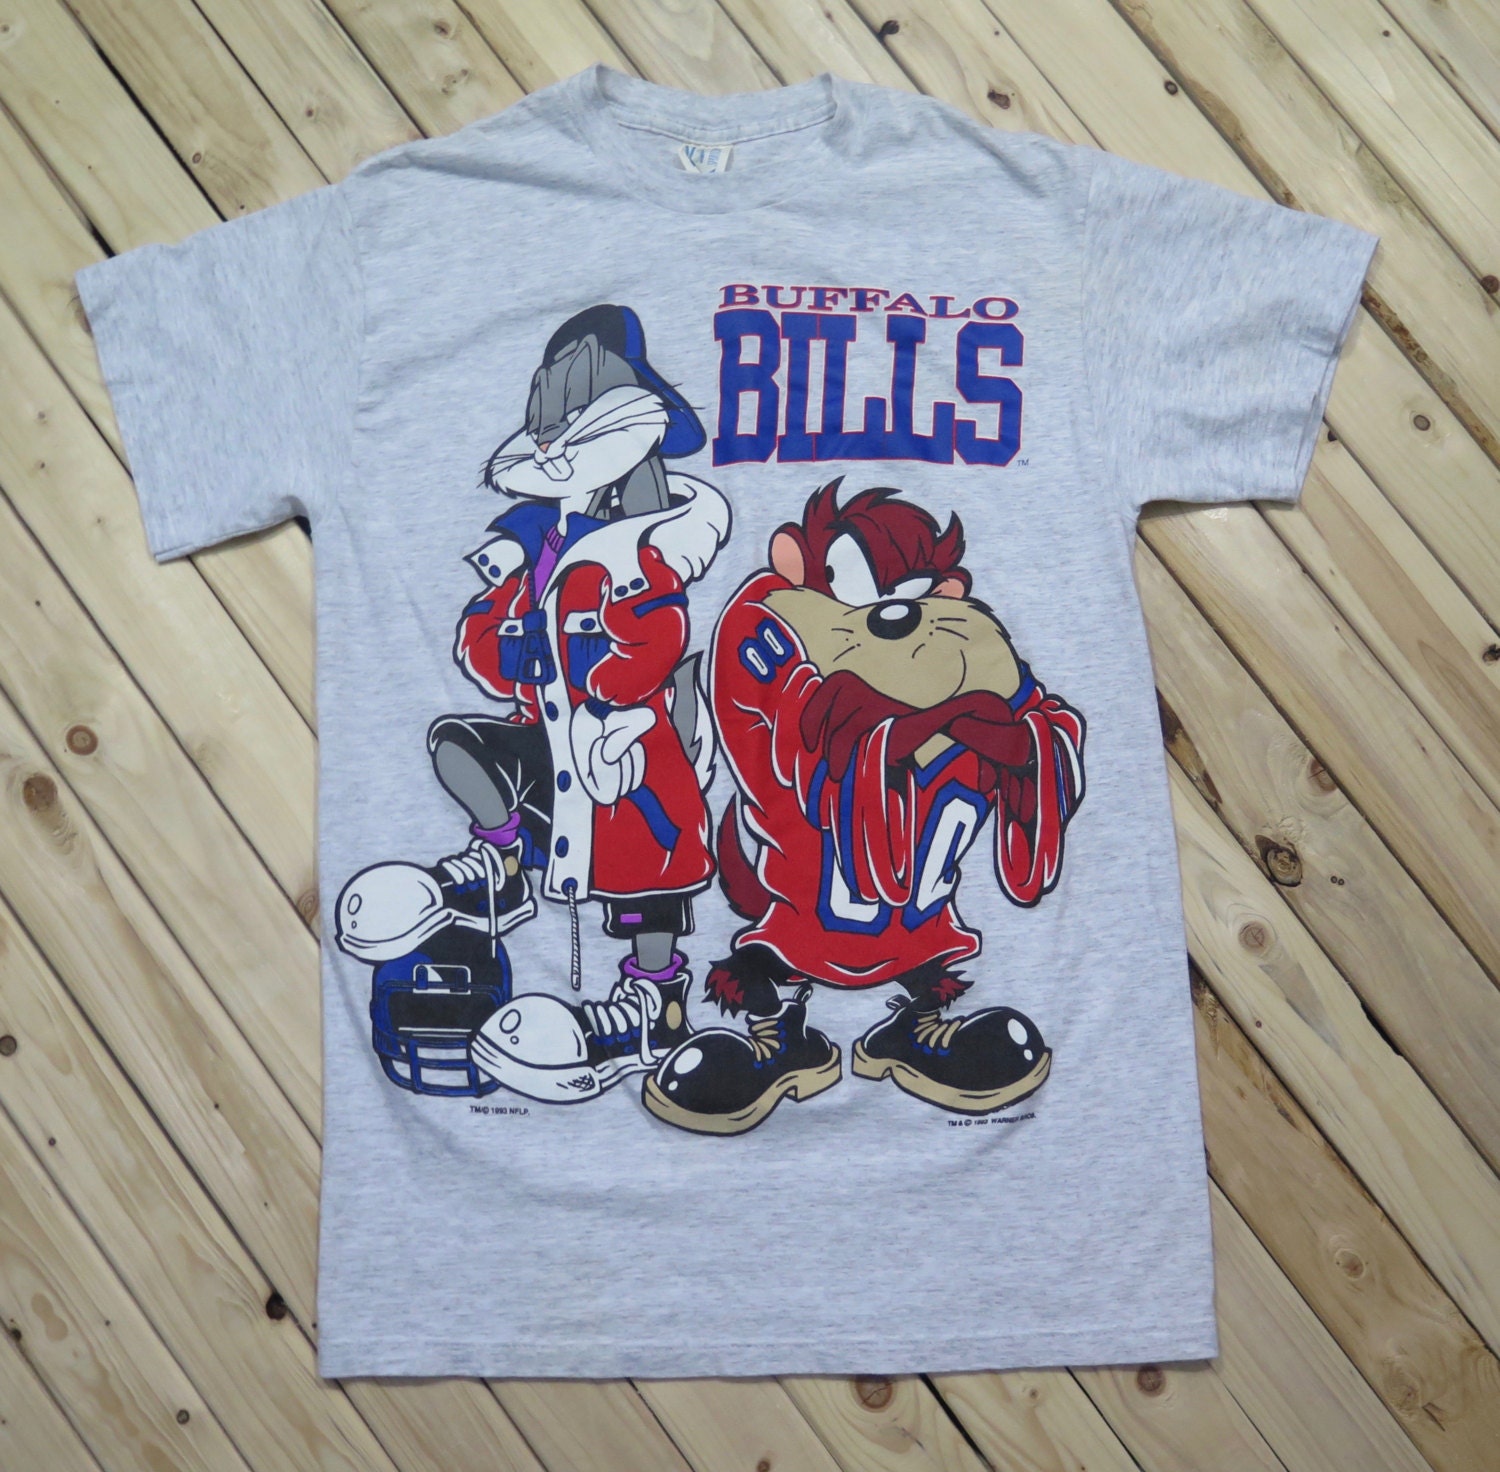 Buffalo Bills t-shirt Looney Tunes 90s bugs by TwoGuysGoodBuys